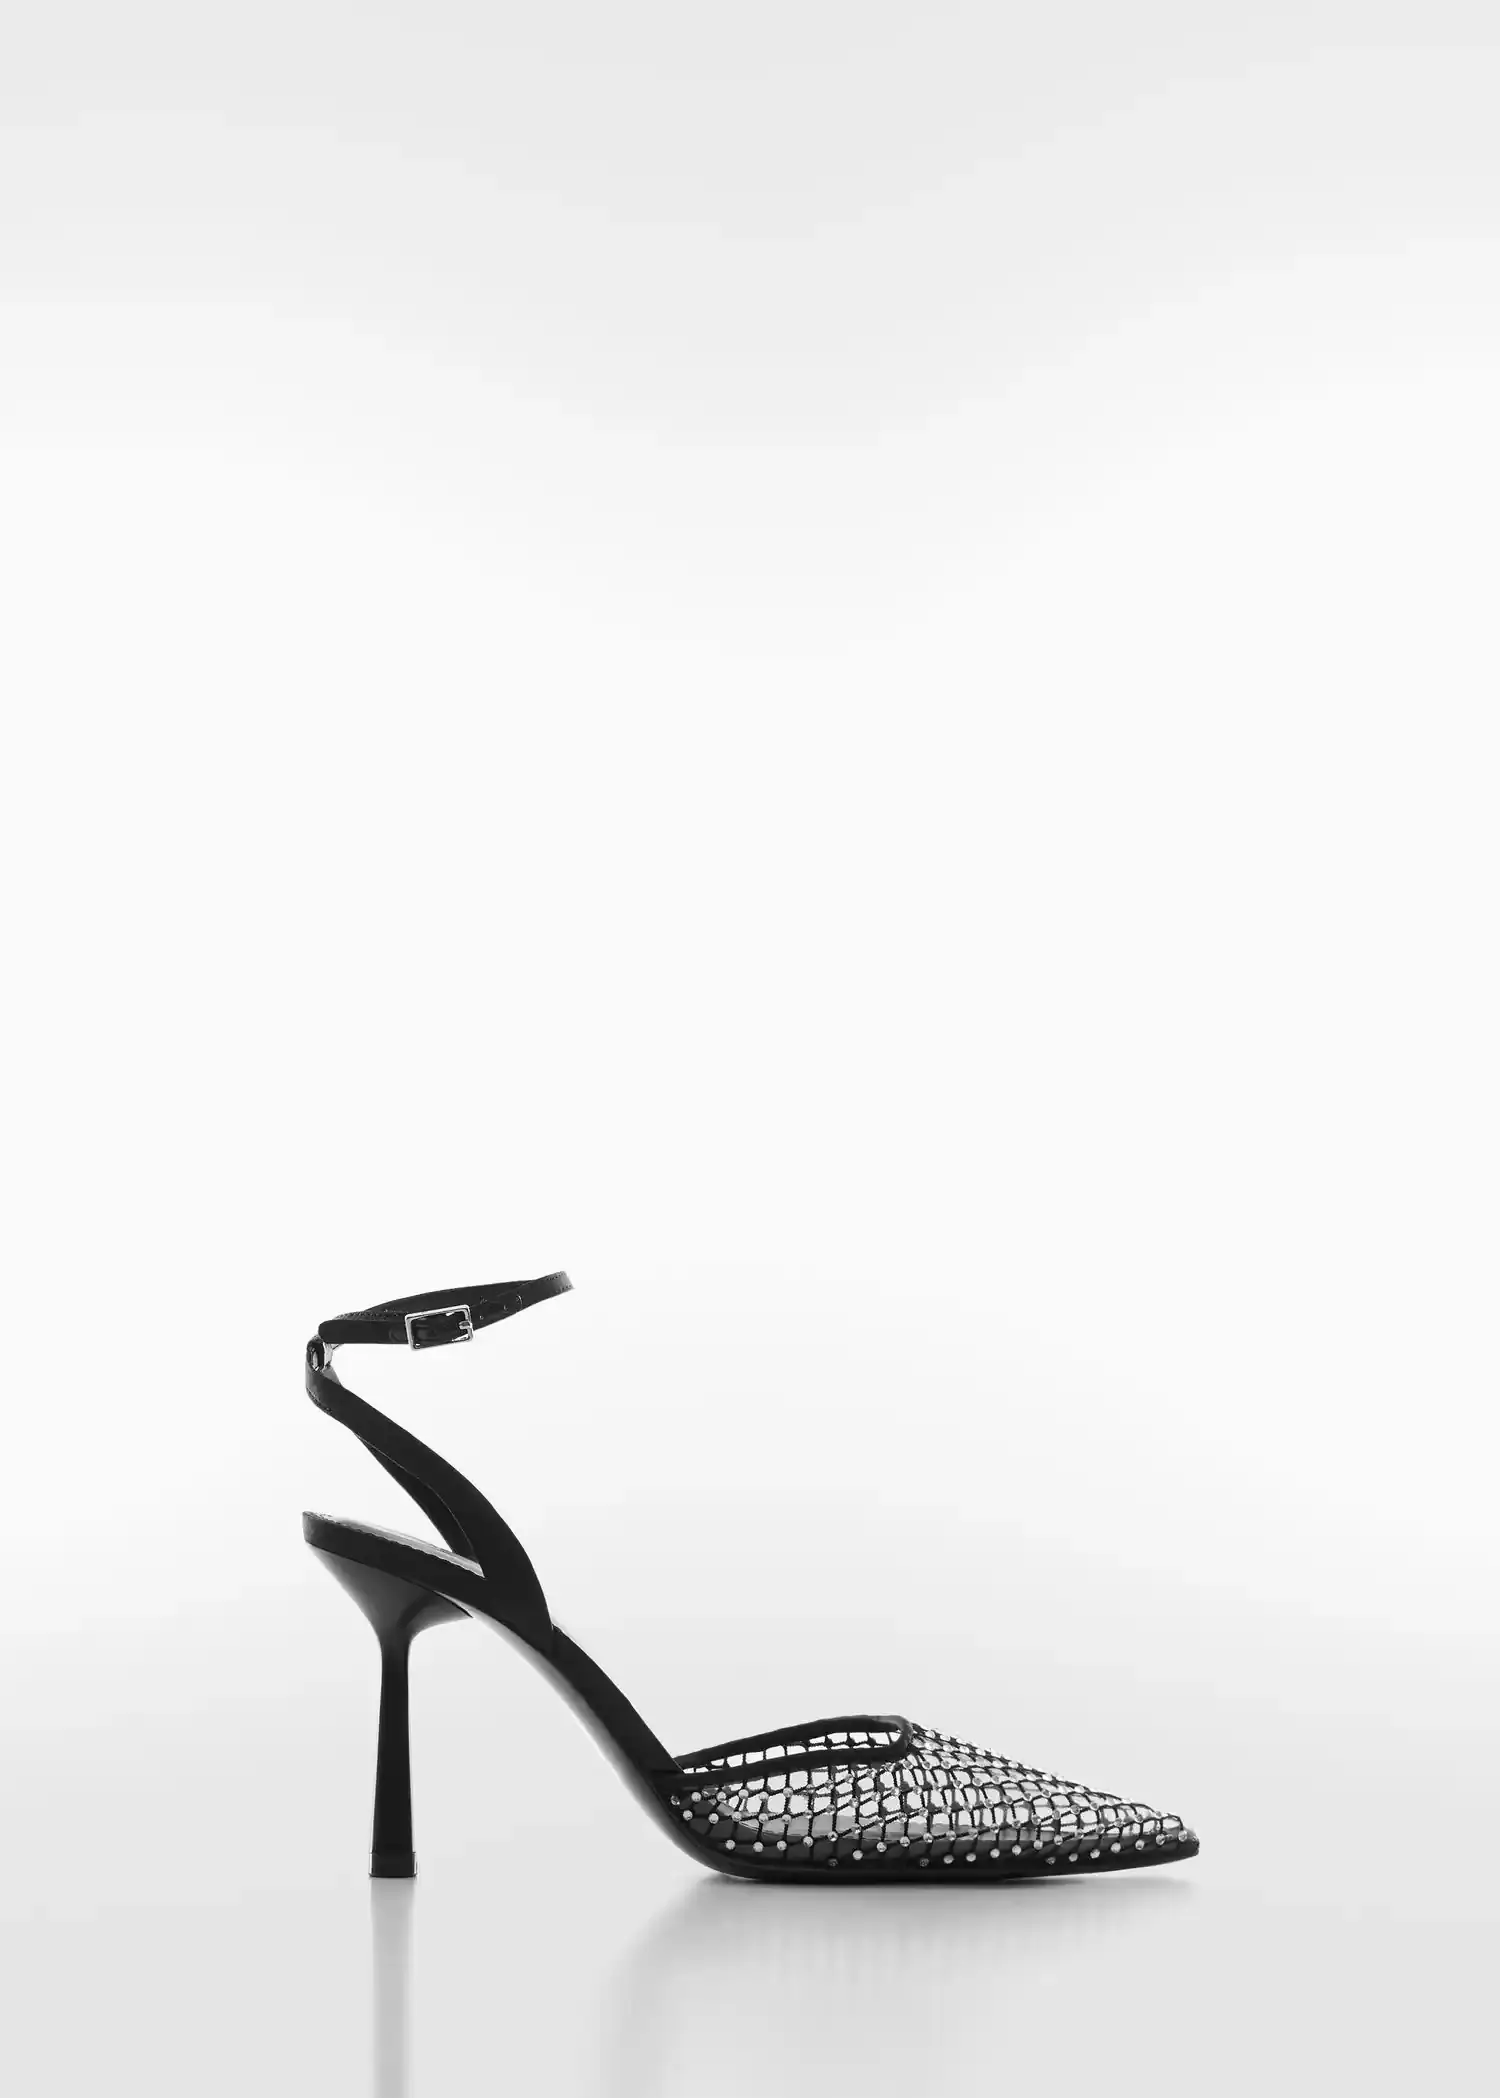 Mango Rhinestone mesh shoes. a black and white photo of a pair of high heels. 